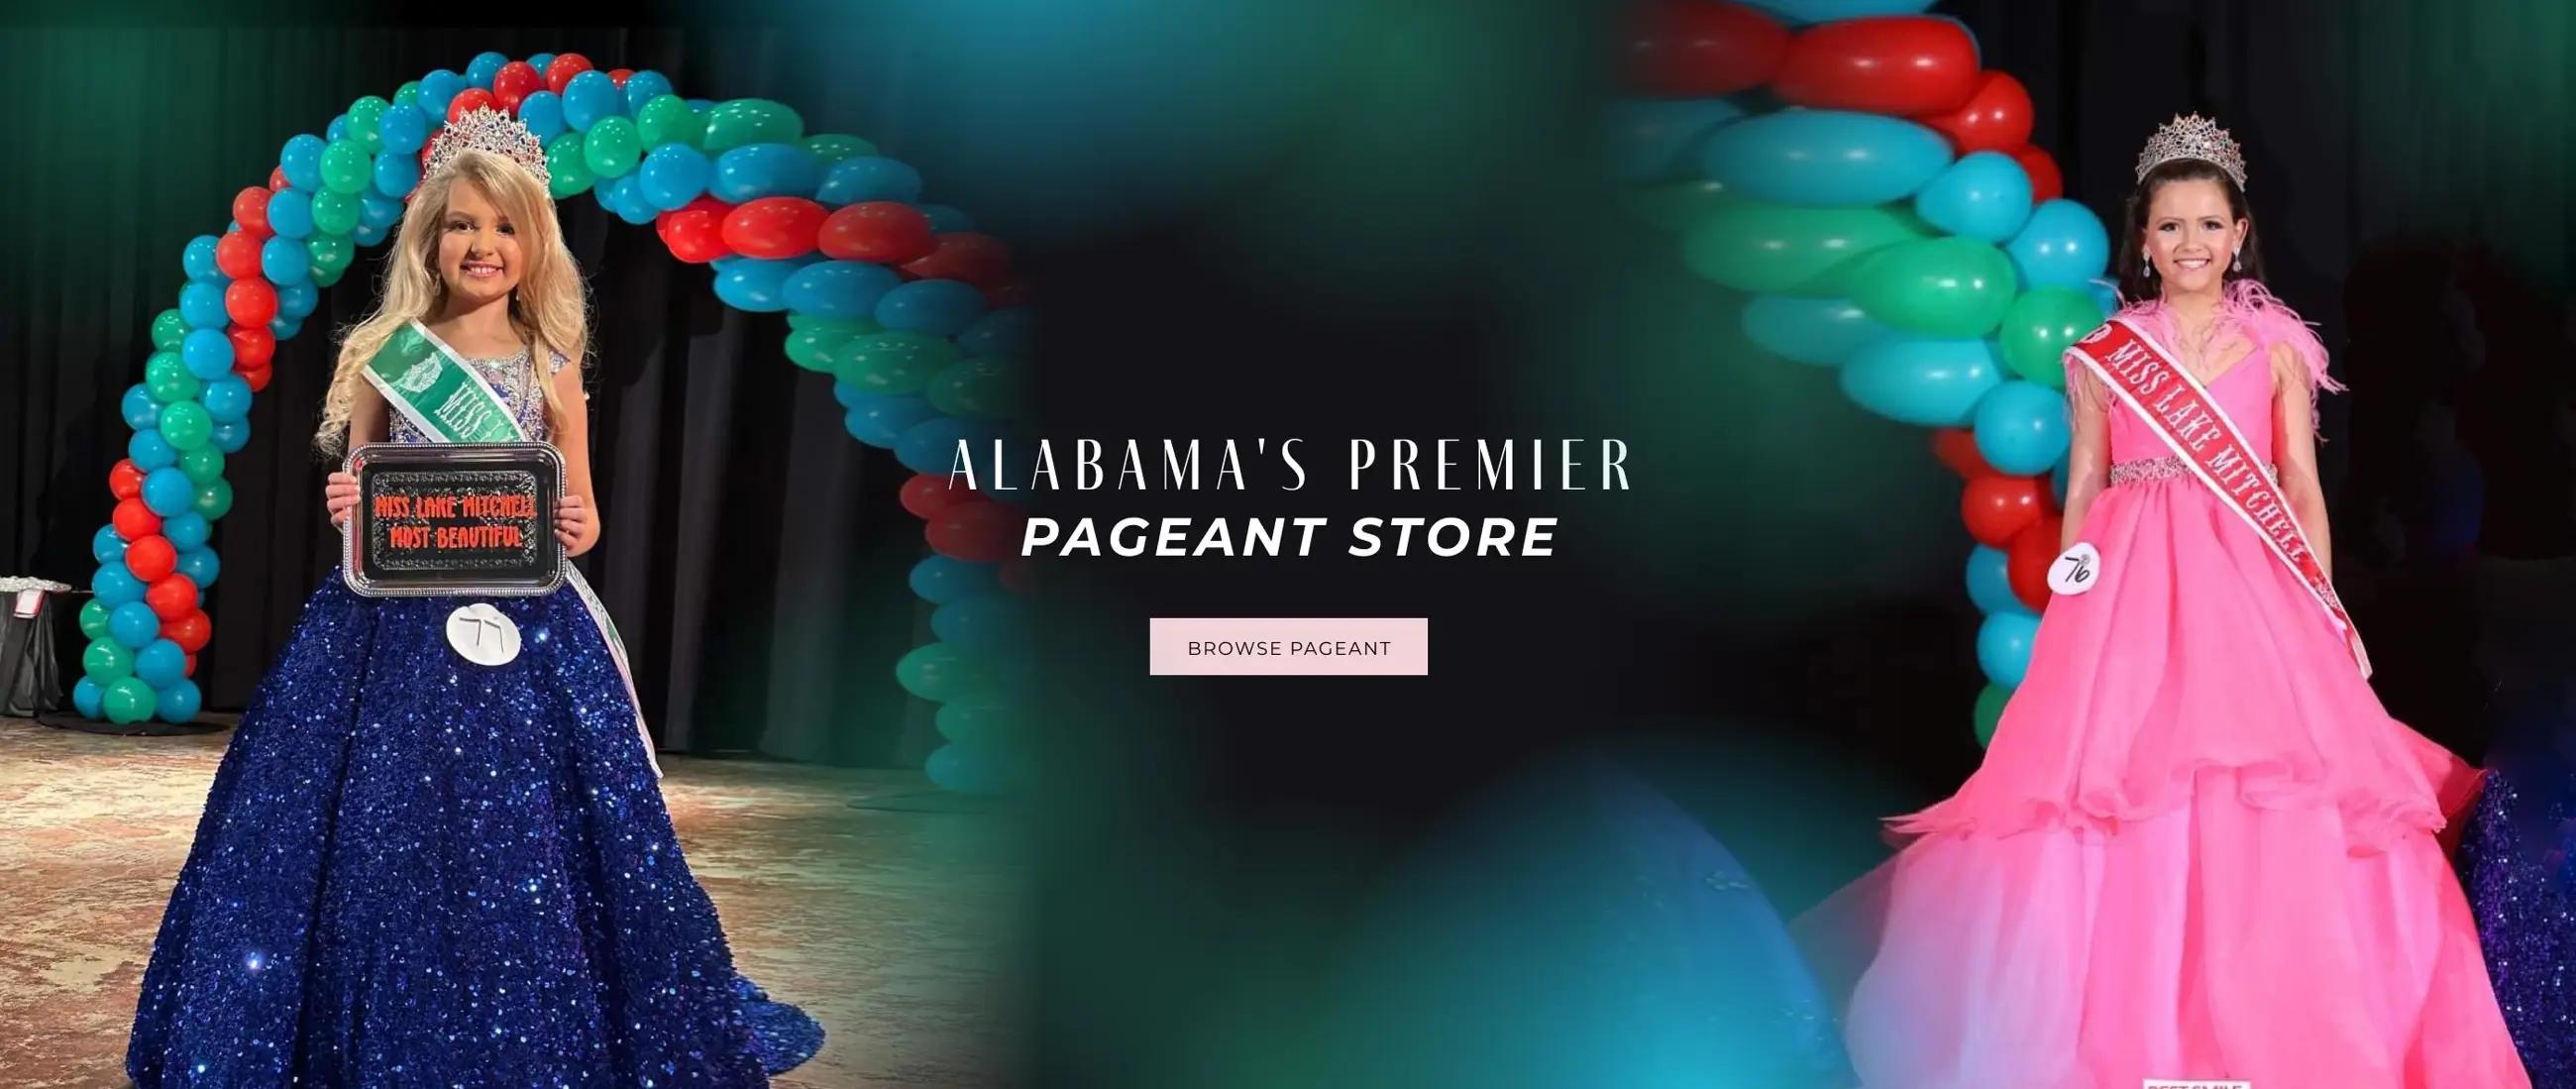 Alabama's Premier Pageant Store - Desktop Banner